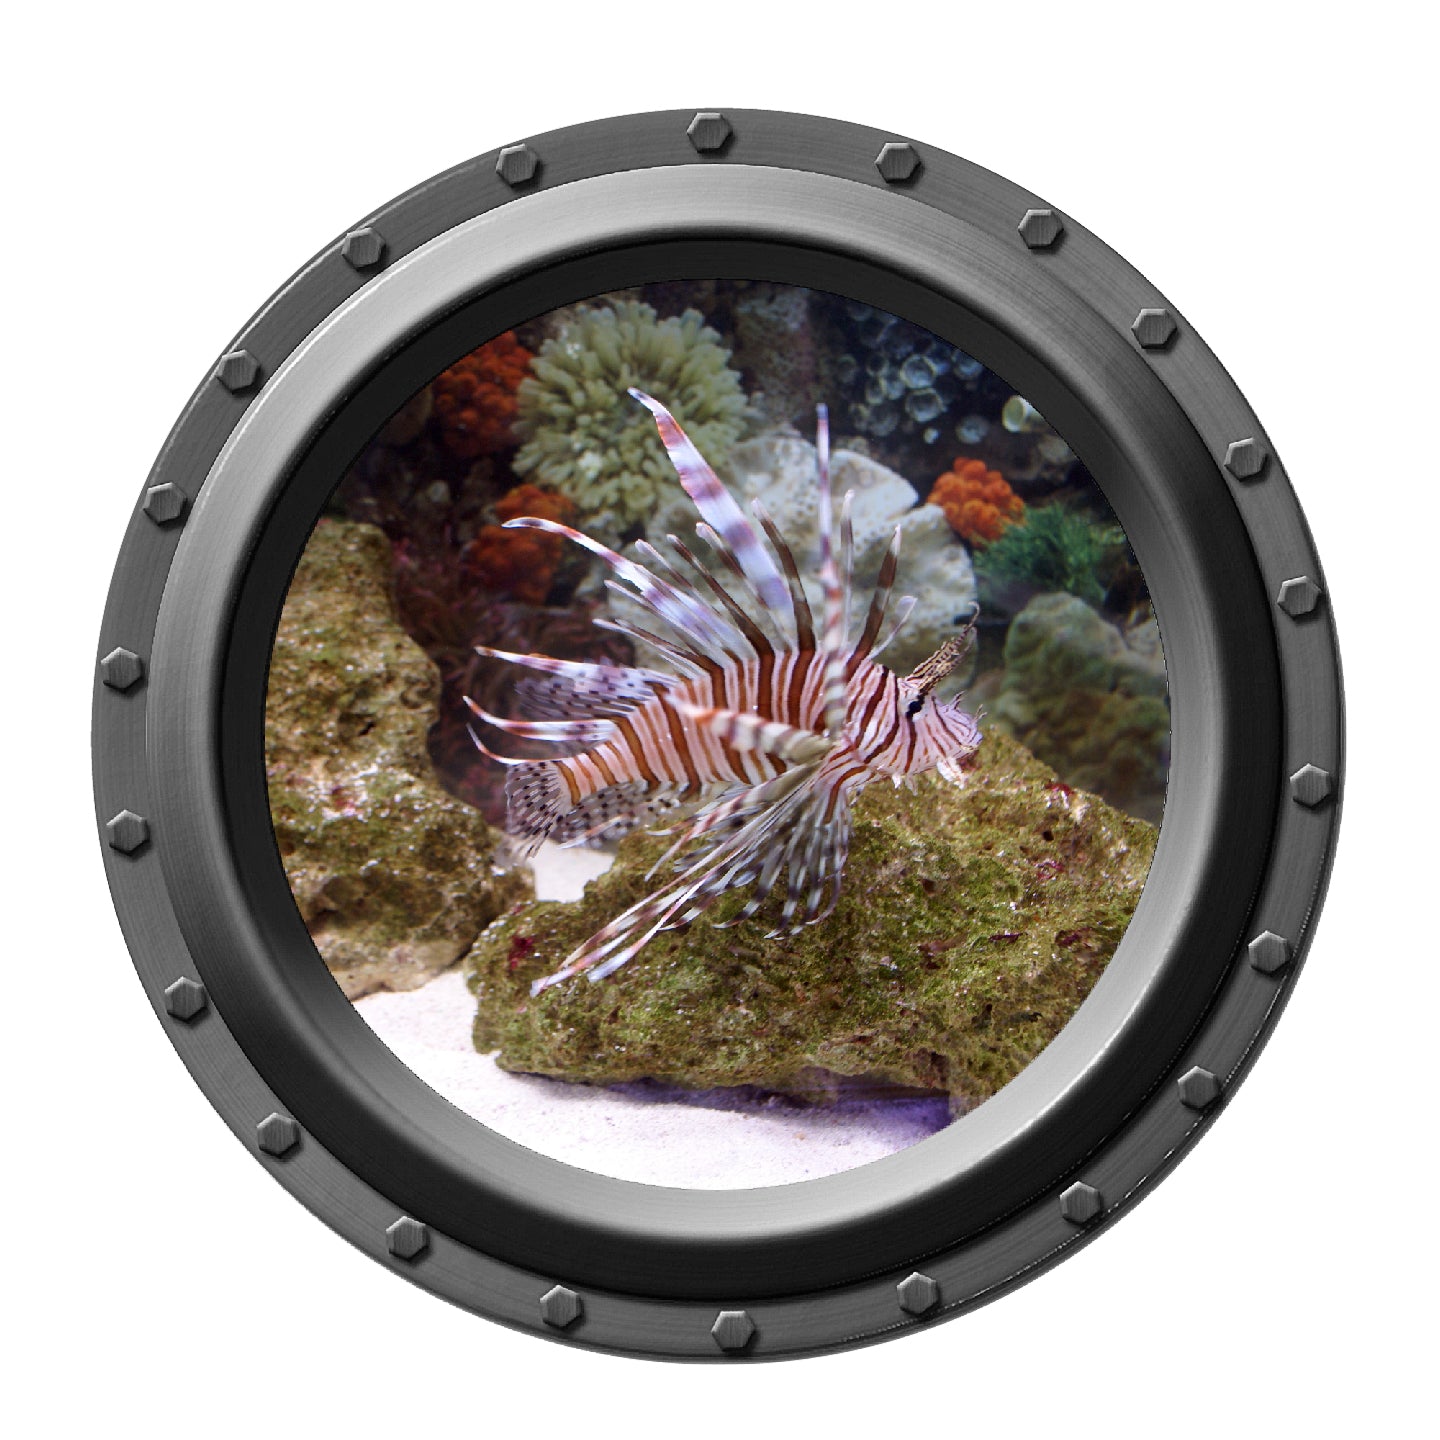 Lionfish Tropical Fish Porthole Wall Decal